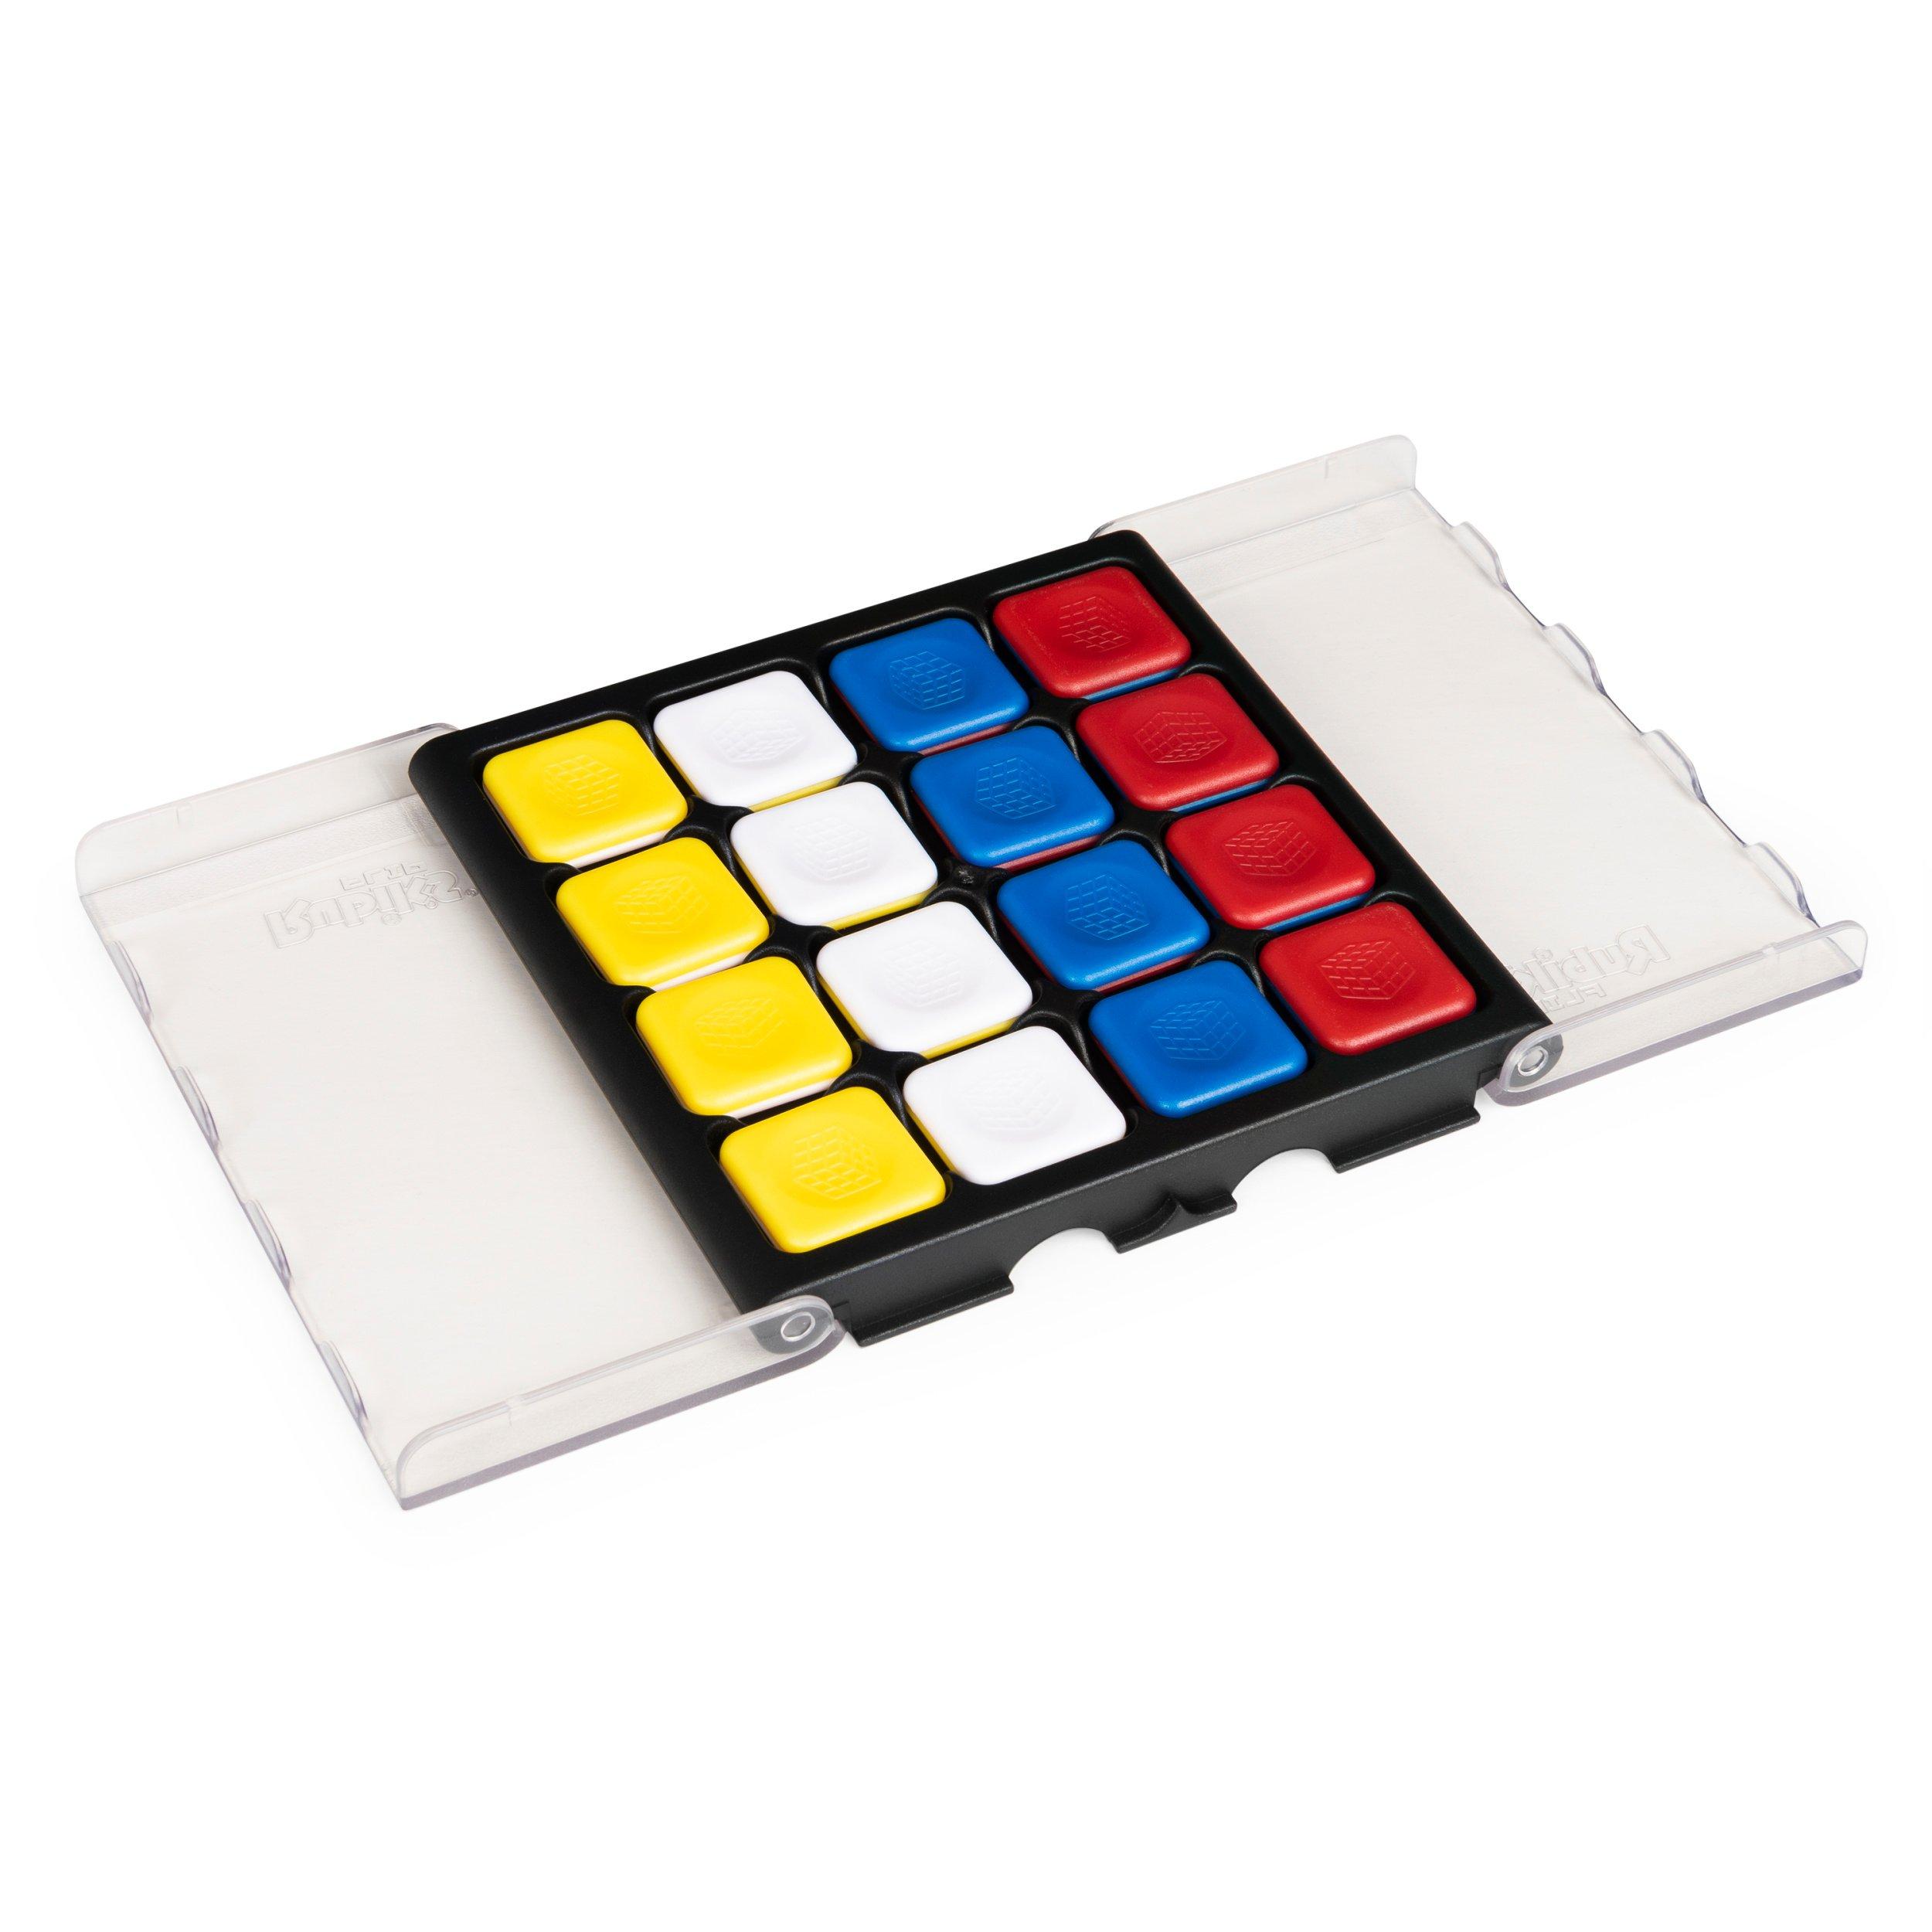 https://media.gamestop.com/i/gamestop/11167022/Spin-Master-Rubiks-Flip-N-Go-Travel-Game